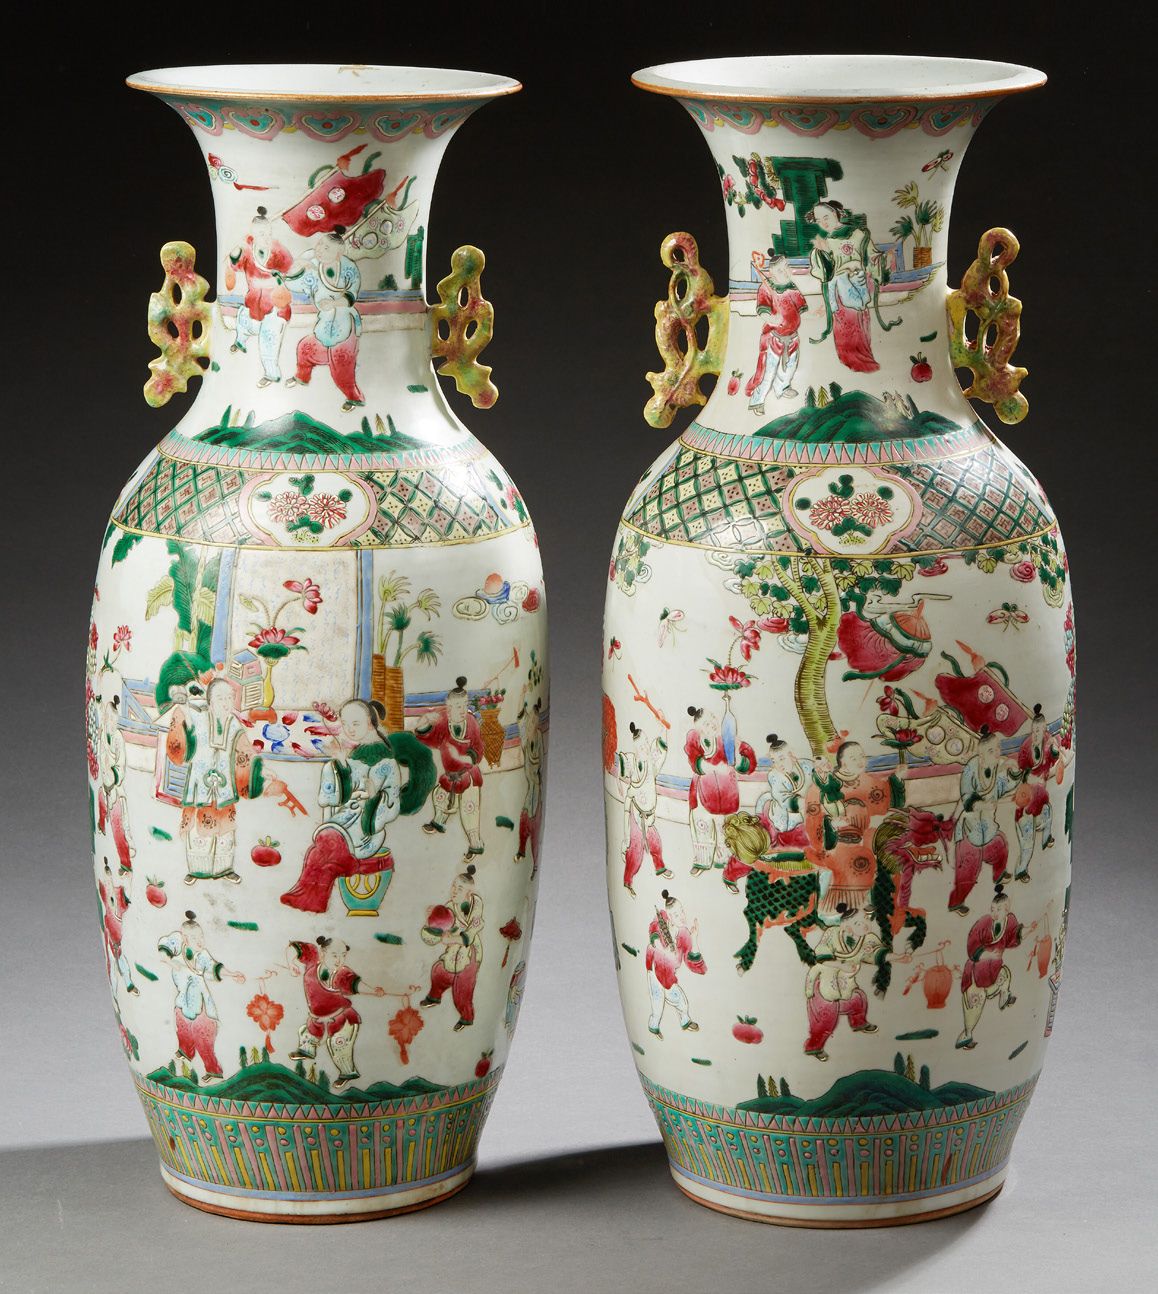 CHINE 一对大的瓷器柱形花瓶，用多色珐琅彩装饰着儿童和年轻妇女在花园里玩耍，肩部装饰着十字架，手柄为卷轴形式
广州 - 约1900年
高：58厘米